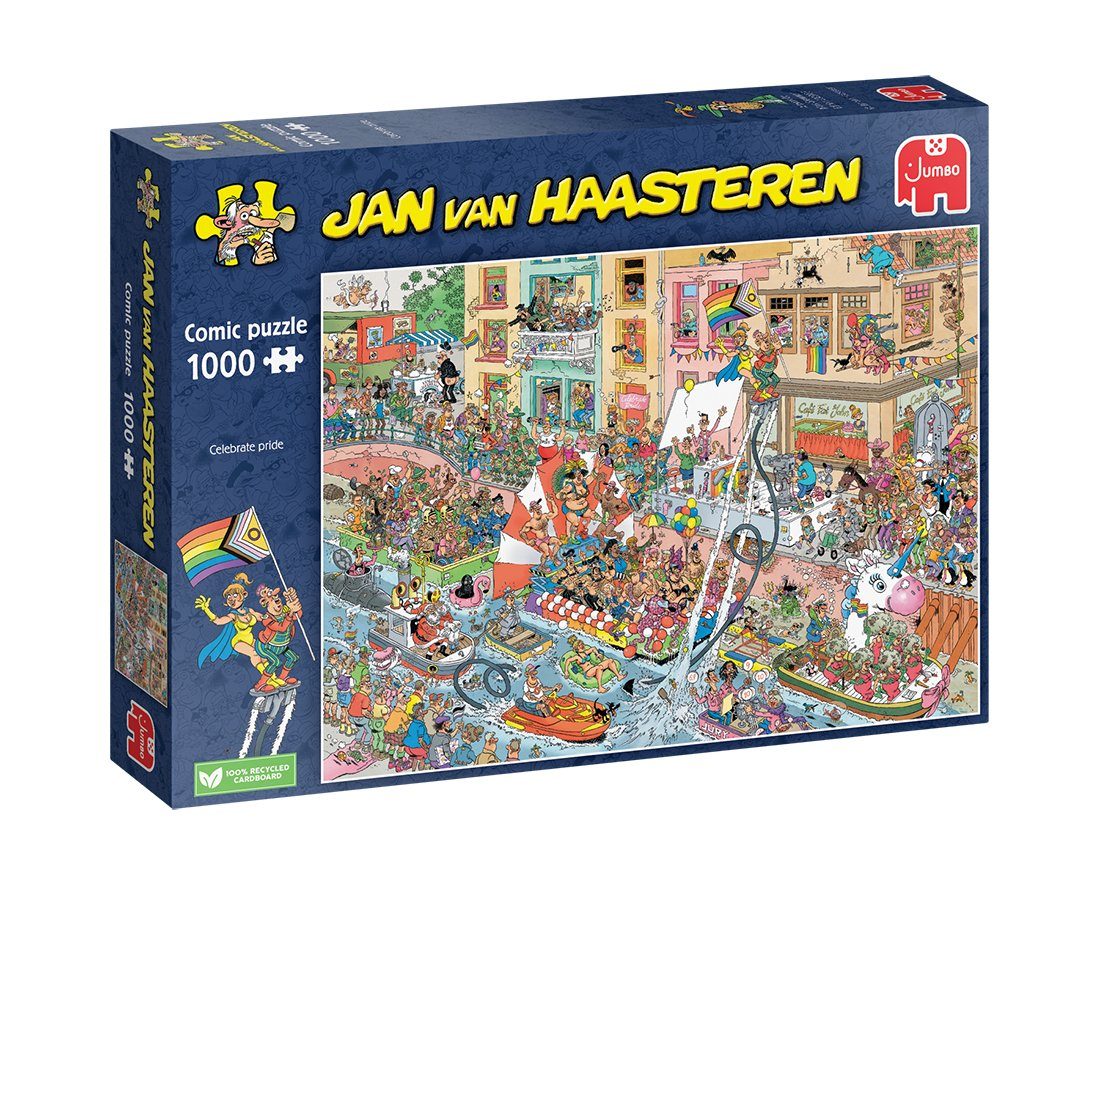 1110100030 Spiele Puzzleteile Jumbo Jumbo Celebrate Spiele Pride 1000 Puzzle, Puzzle